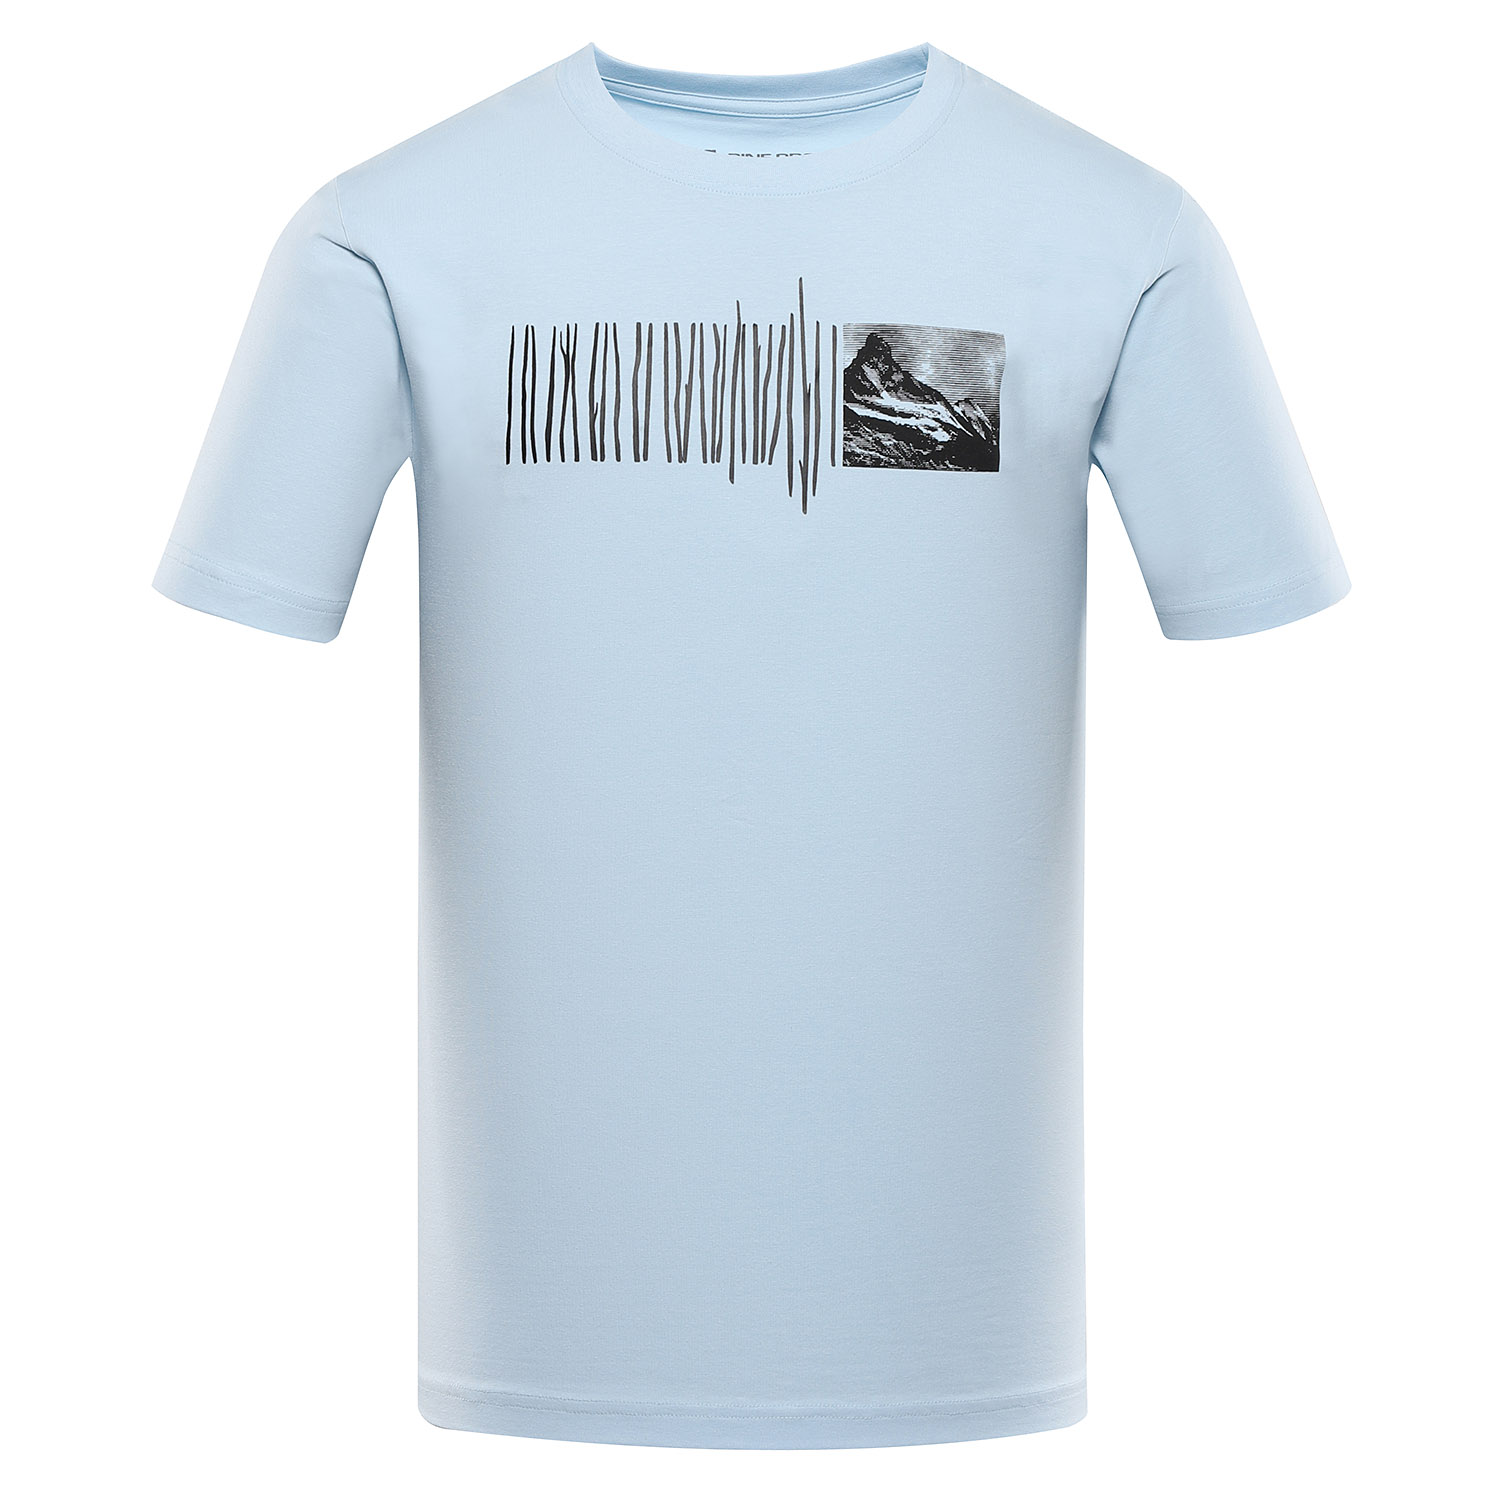 Men's cotton T-shirt ALPINE PRO NORD nantucket breeze variant pc